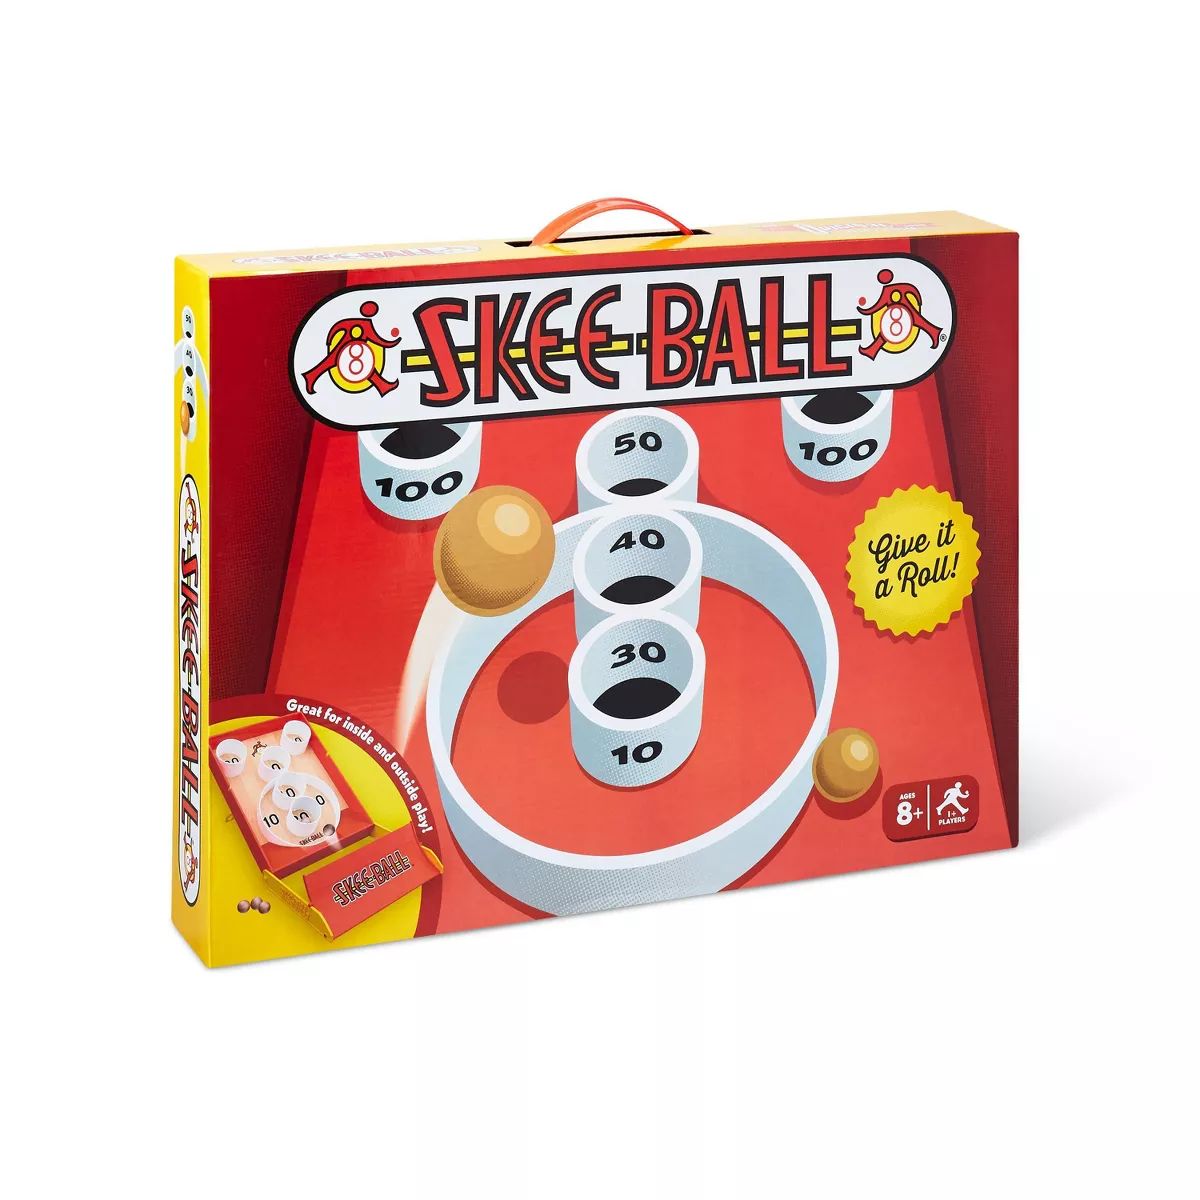 SkeeBall The Classic Arcade Game | Target